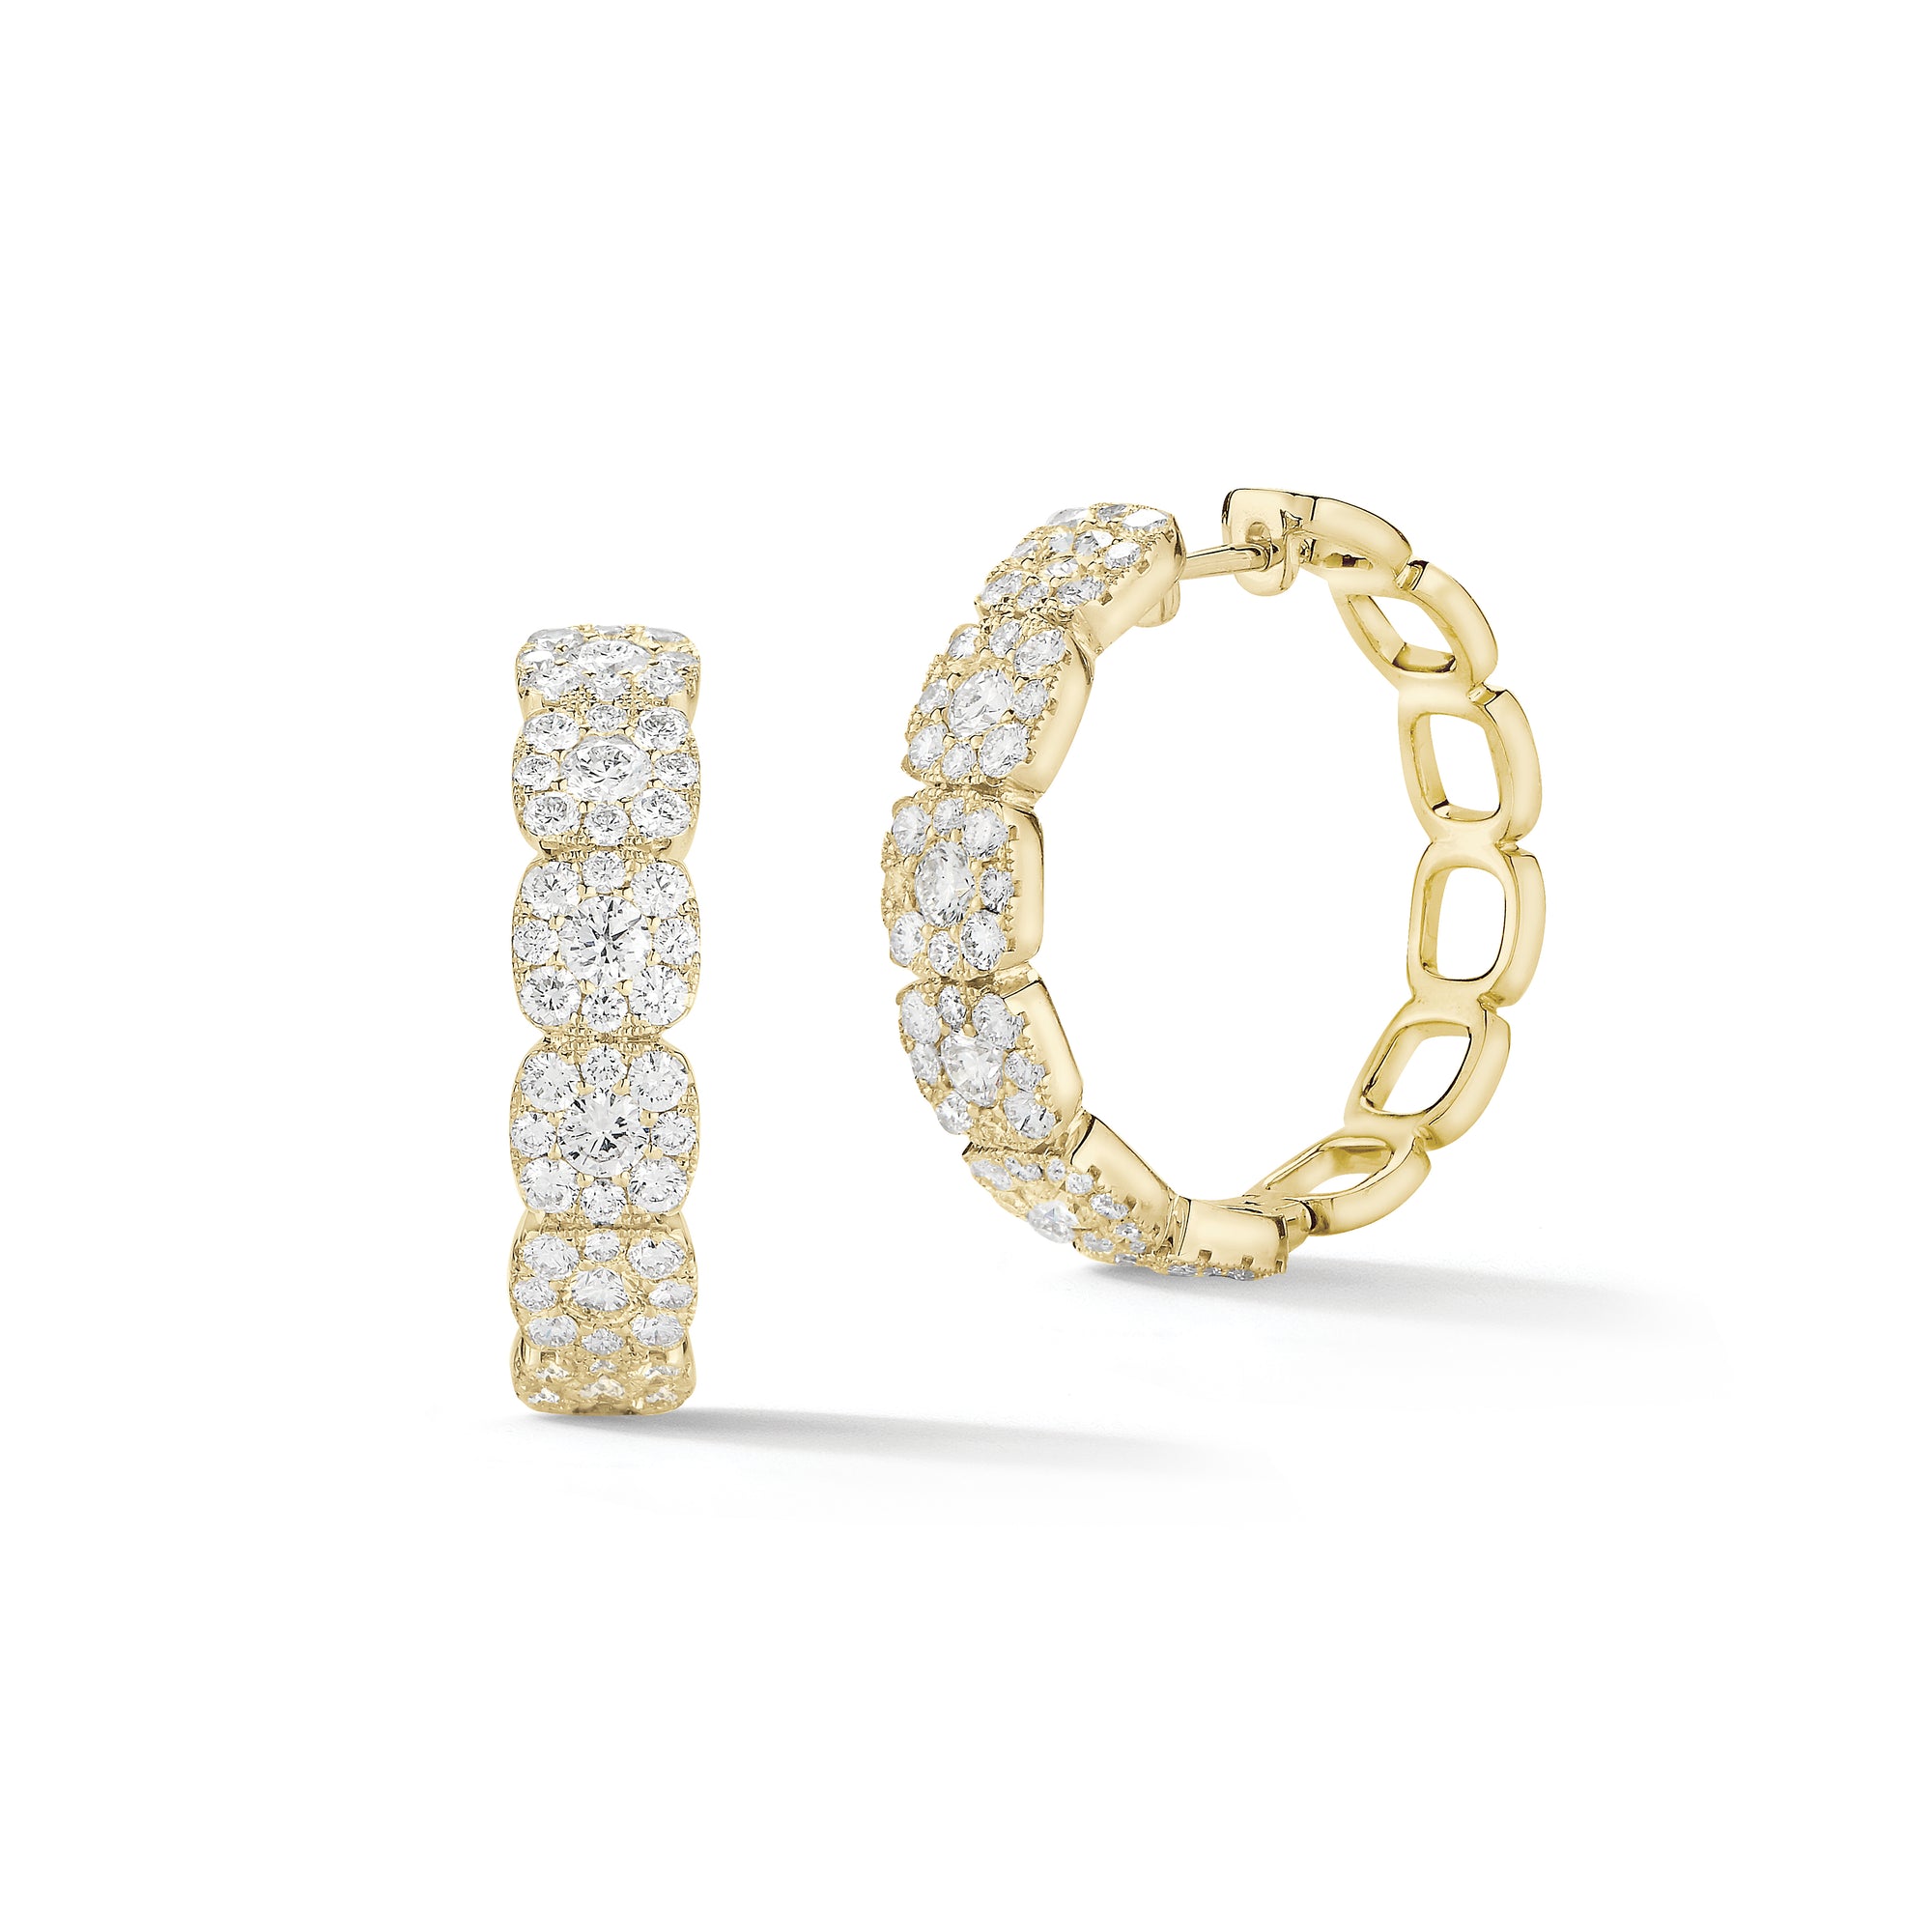 Cushion halo diamond hoop earrings 18k gold, 10.88 grams, 12 round shared prong-set diamonds 1.56 carats, 96 round shared prong-set diamonds 2.43 carats.  Earring size 28 millimeter diameter, 6.7 millimeter width.